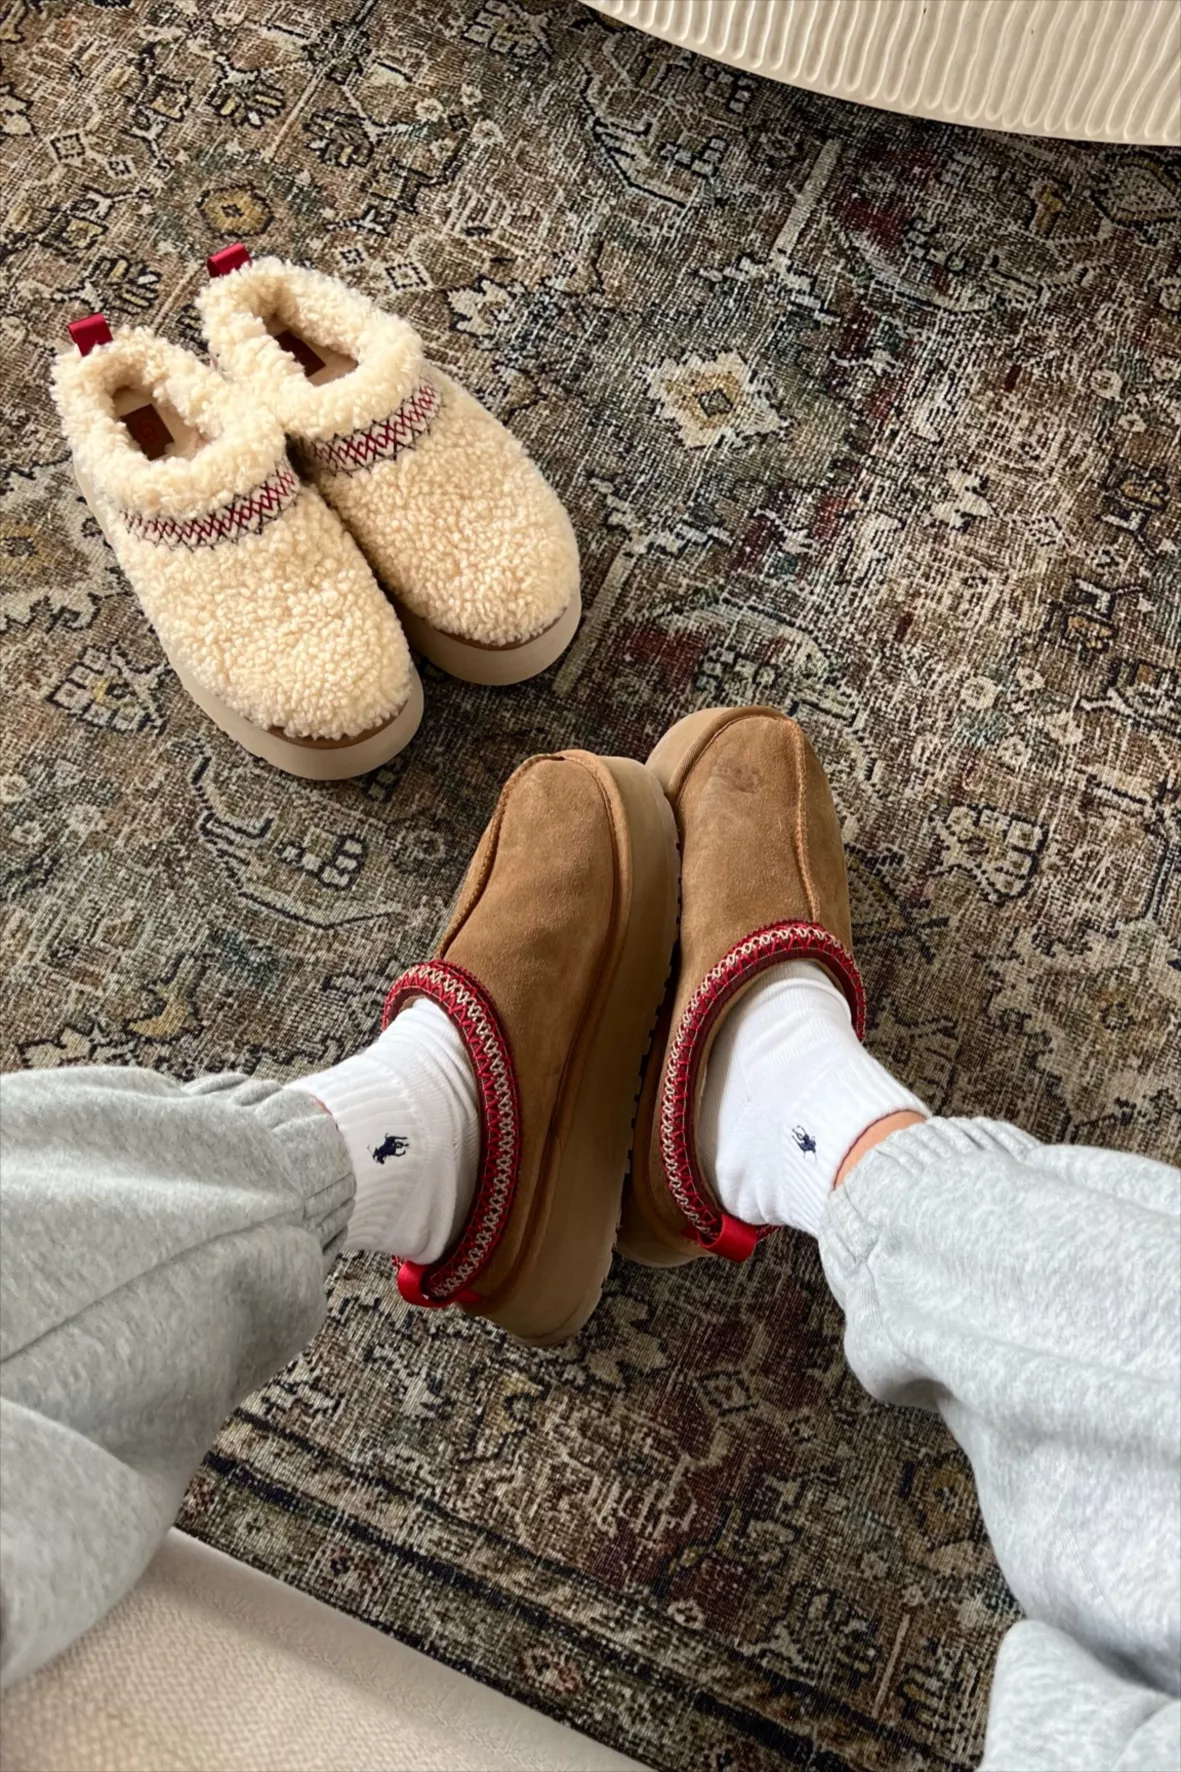 The UGG Tasman/Tazz: how to wear the new trendy slipper?